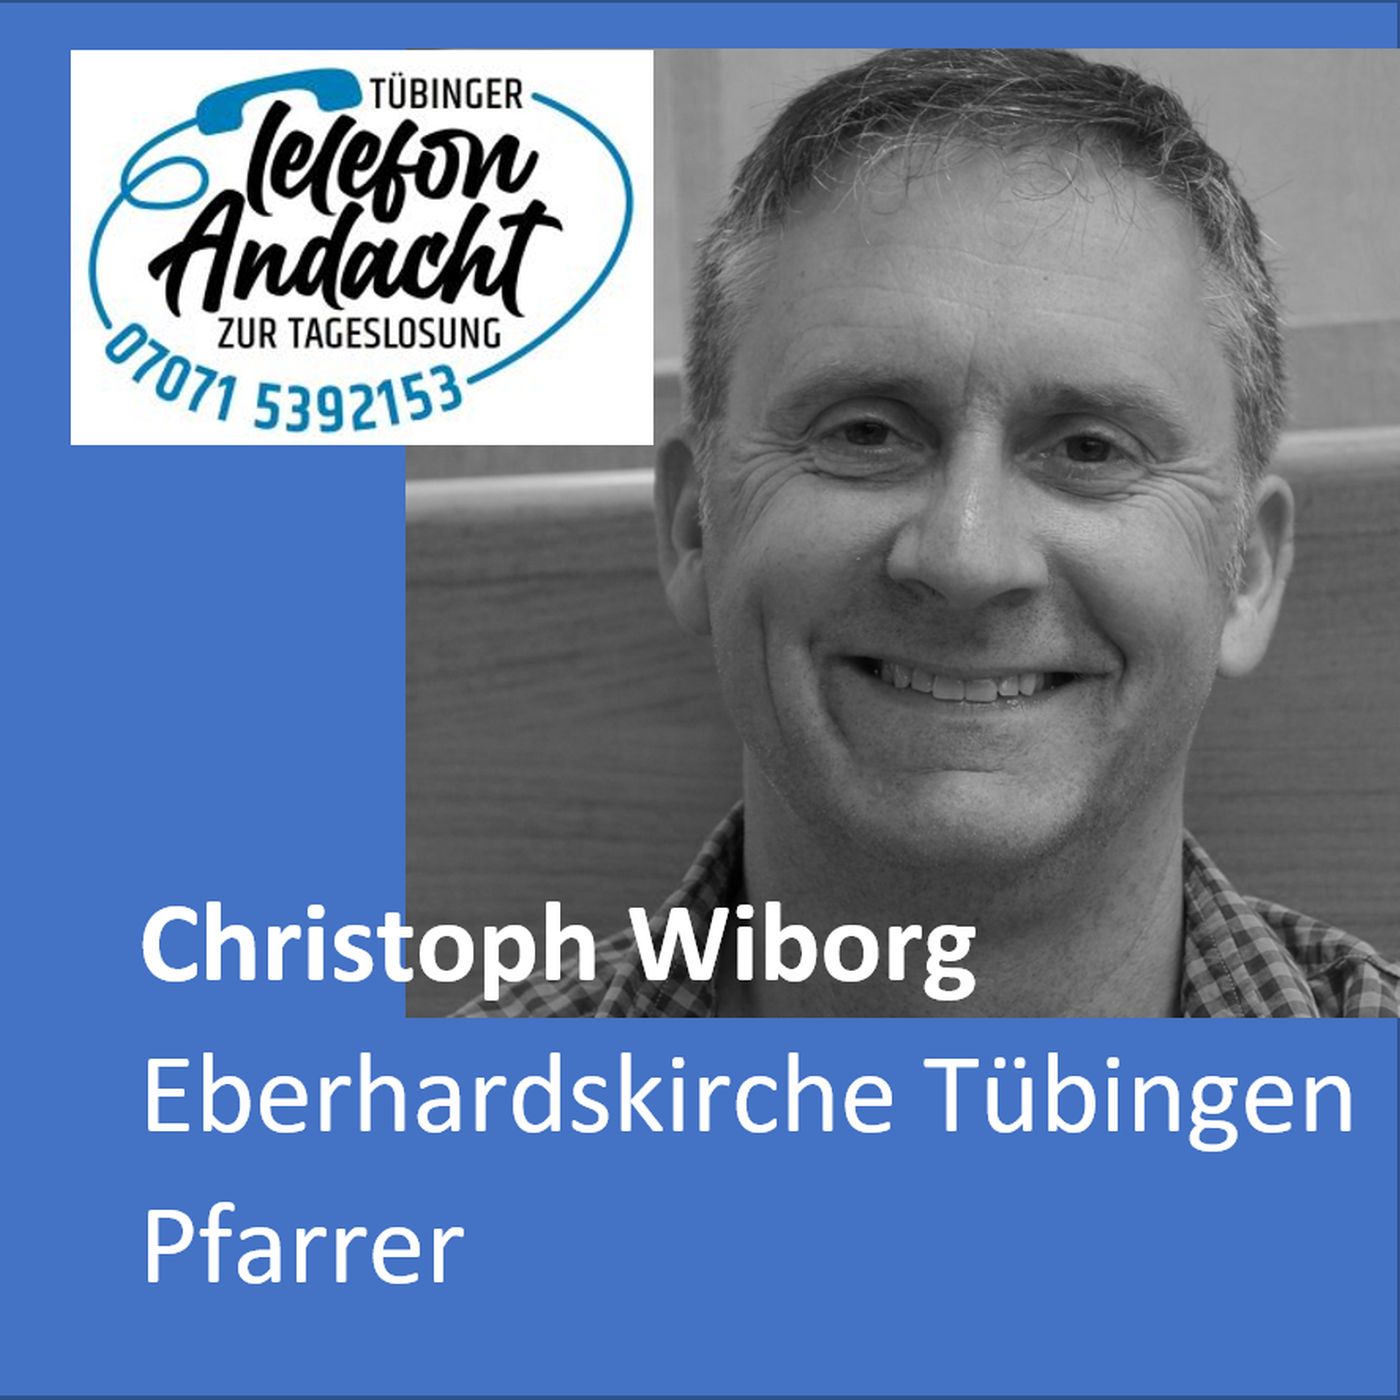 24 04 17 Christoph Wiborg